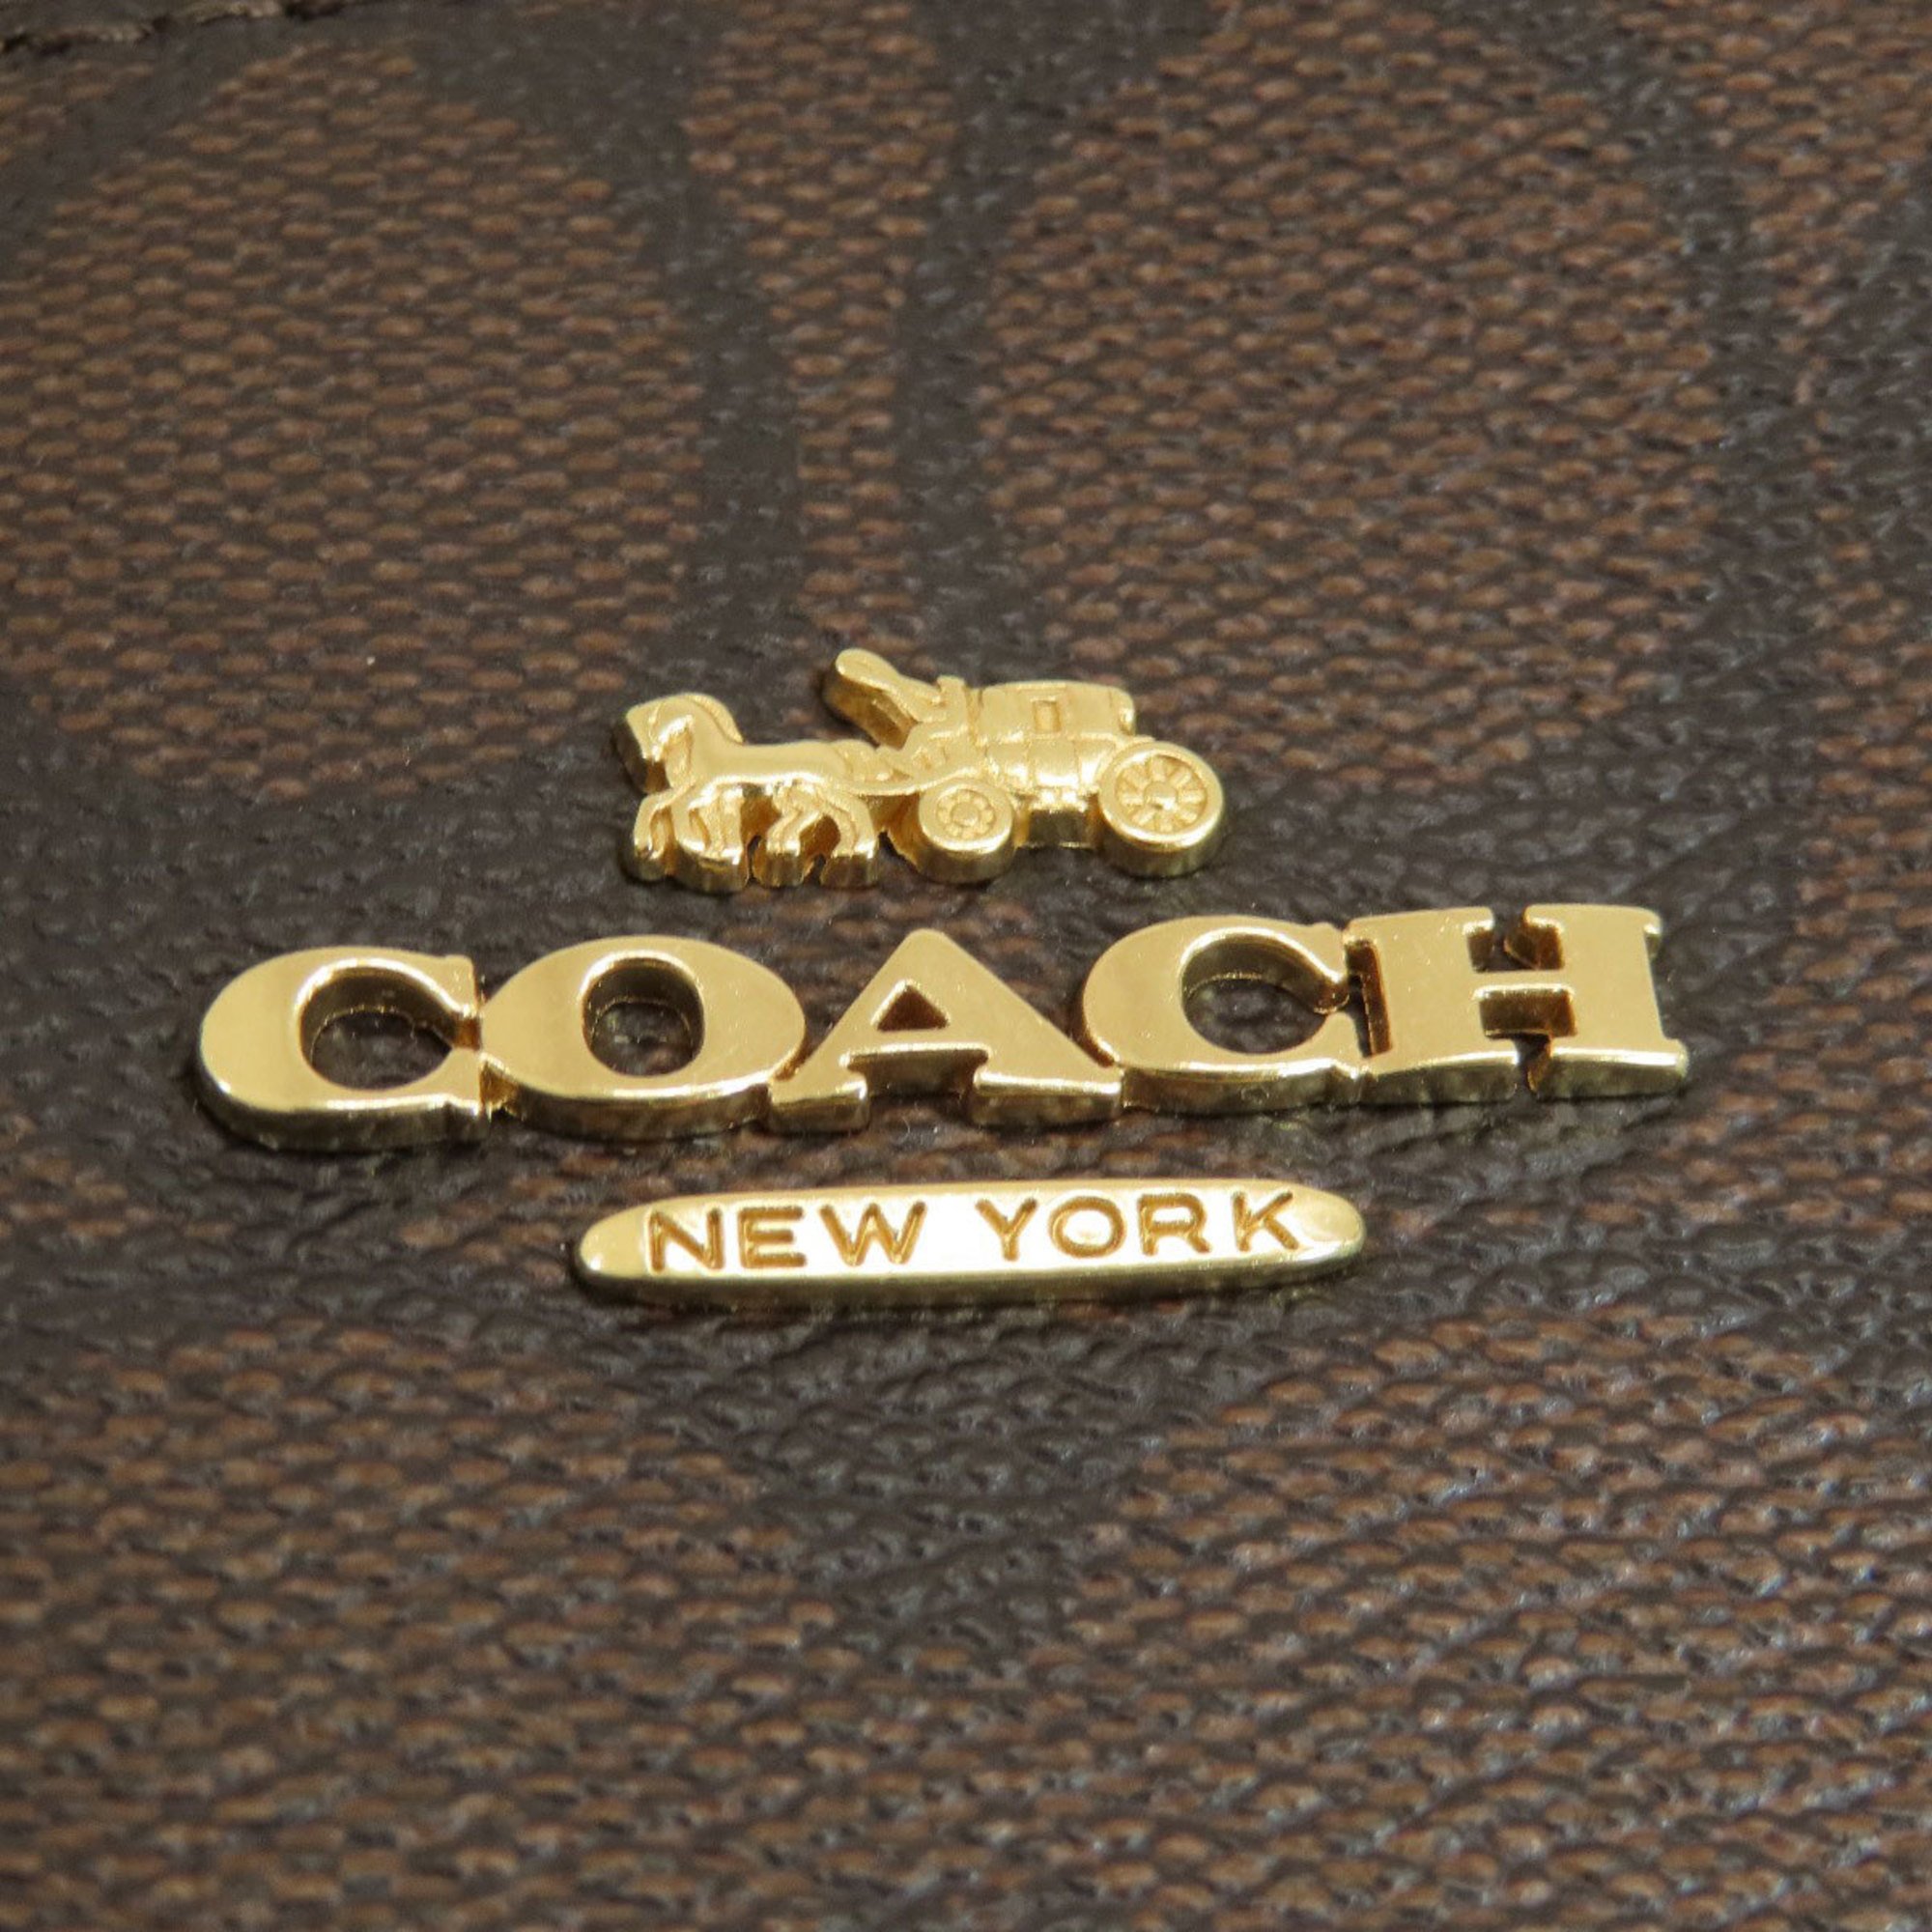 Coach 4455 Signature Tote Bag PVC Women's COACH